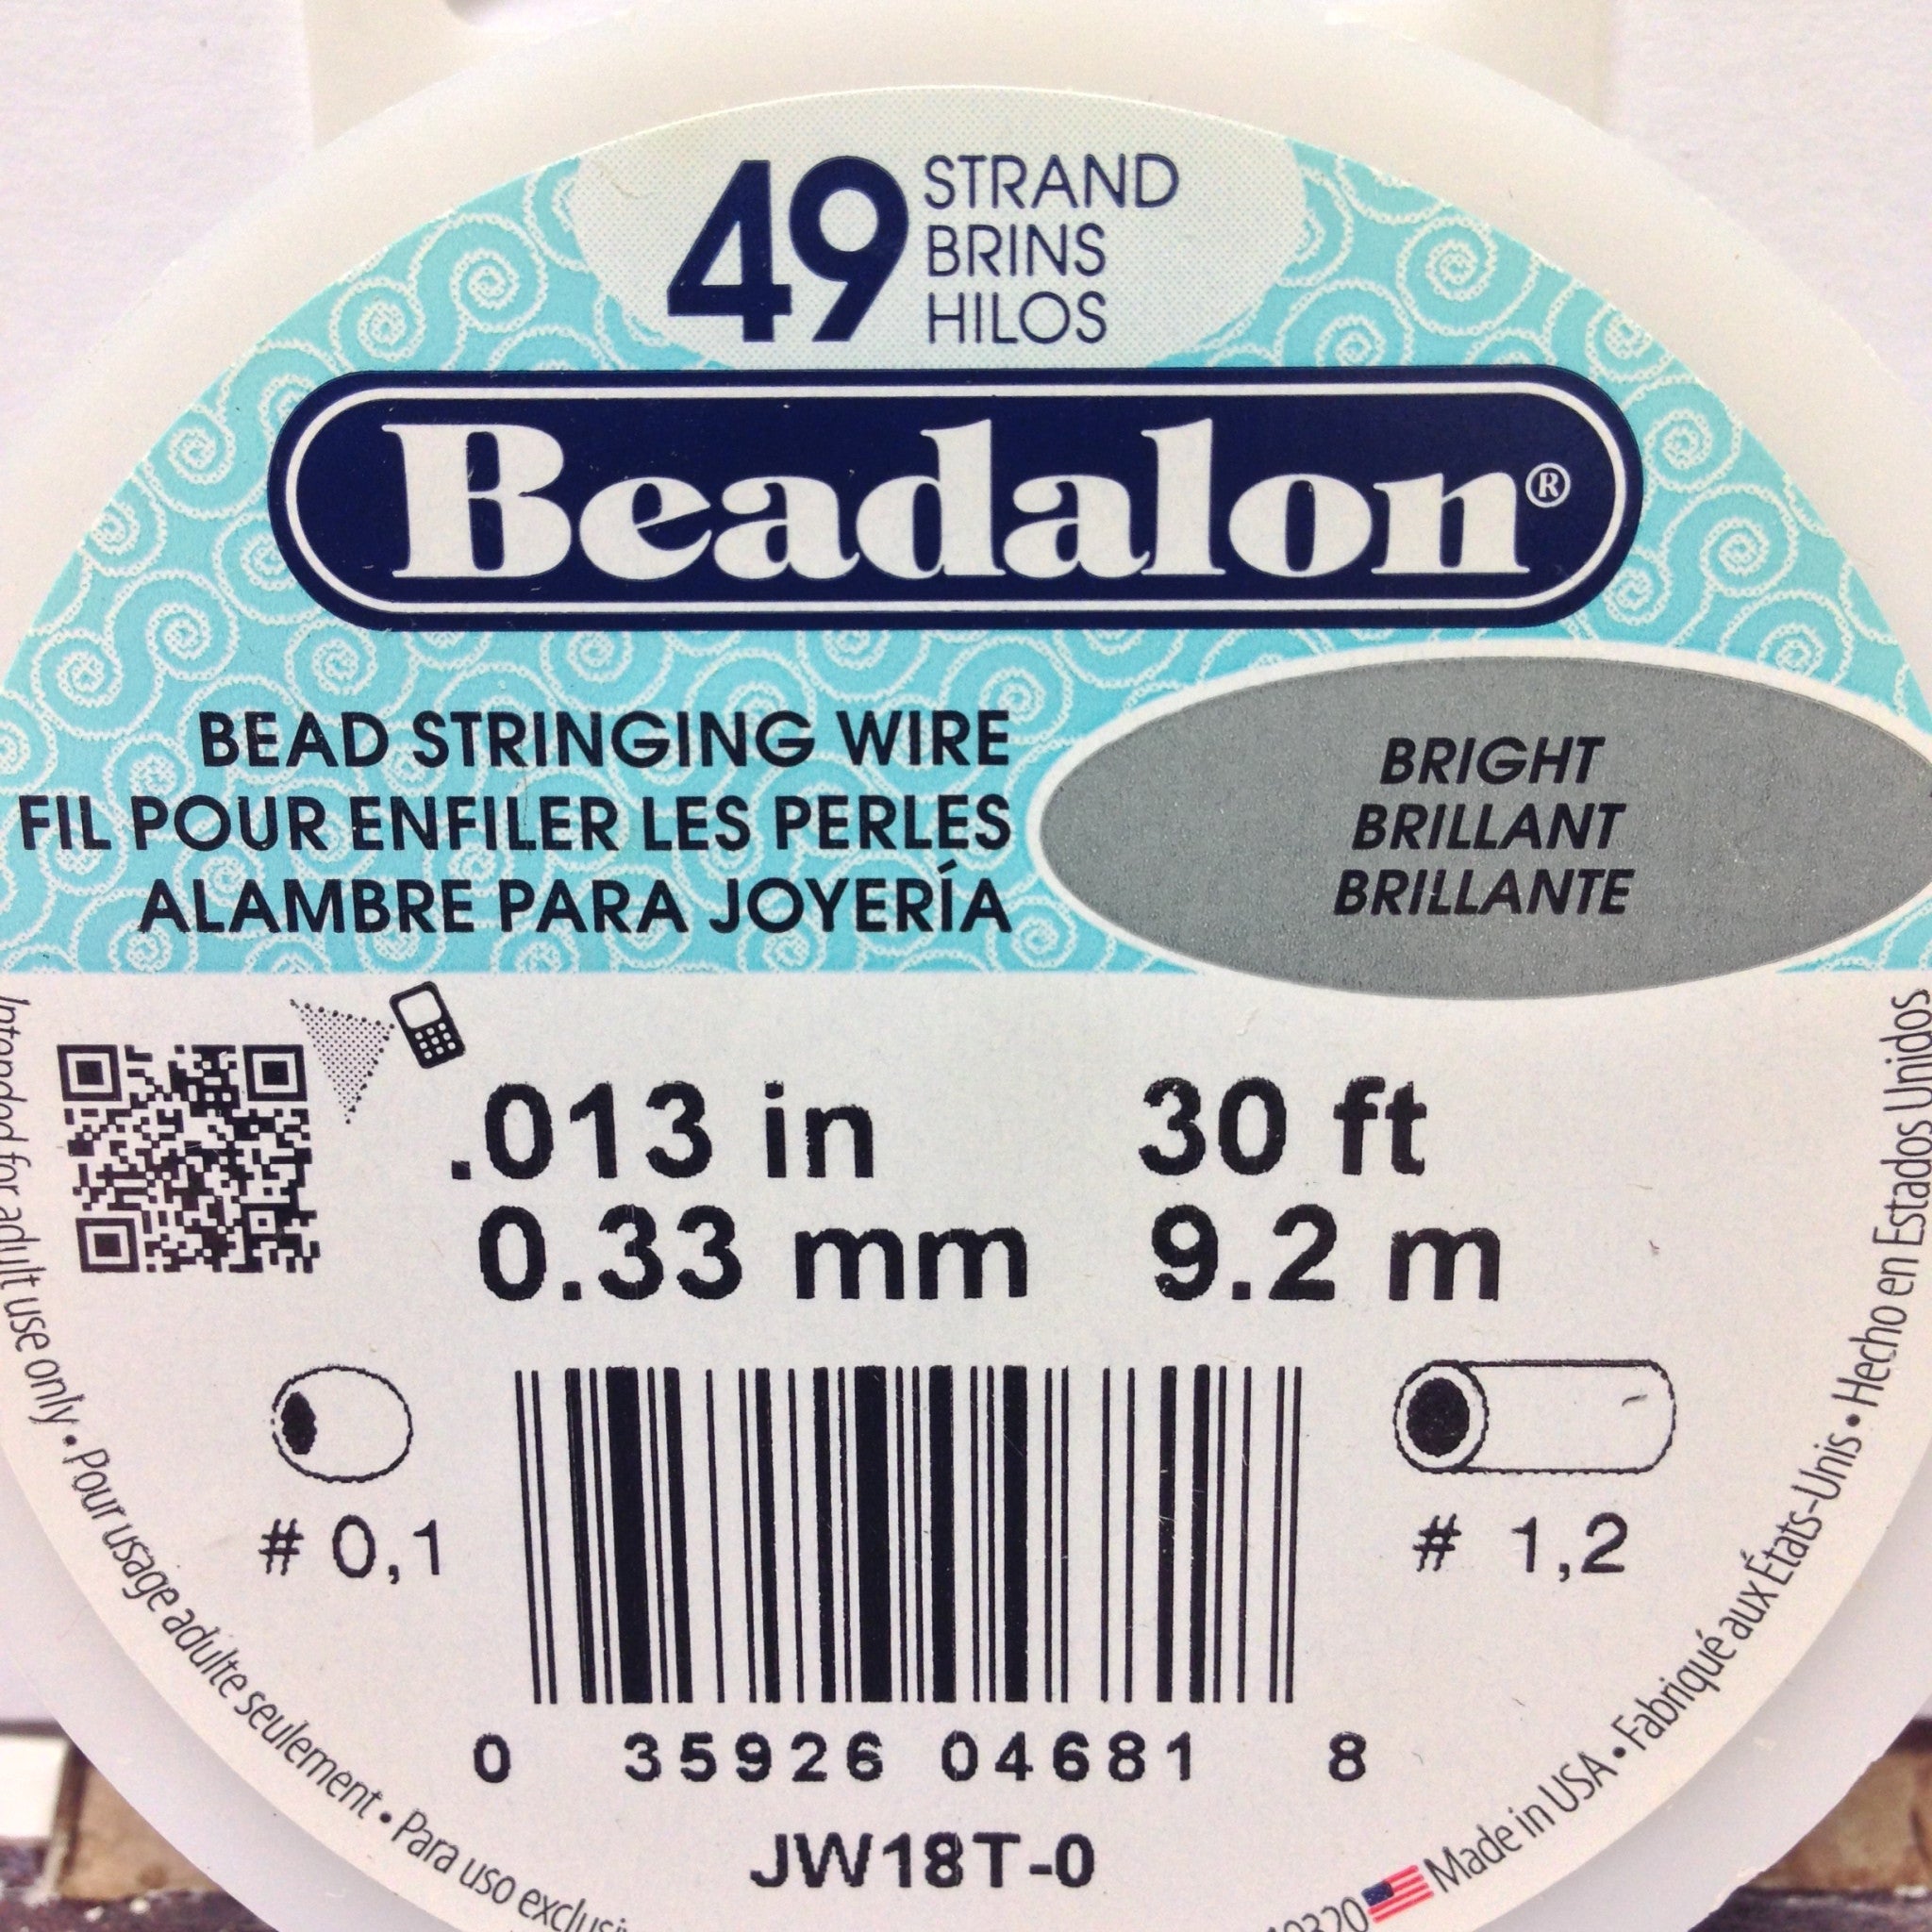 Beadalon Bead Wire 49 Strand .013 Bright 30